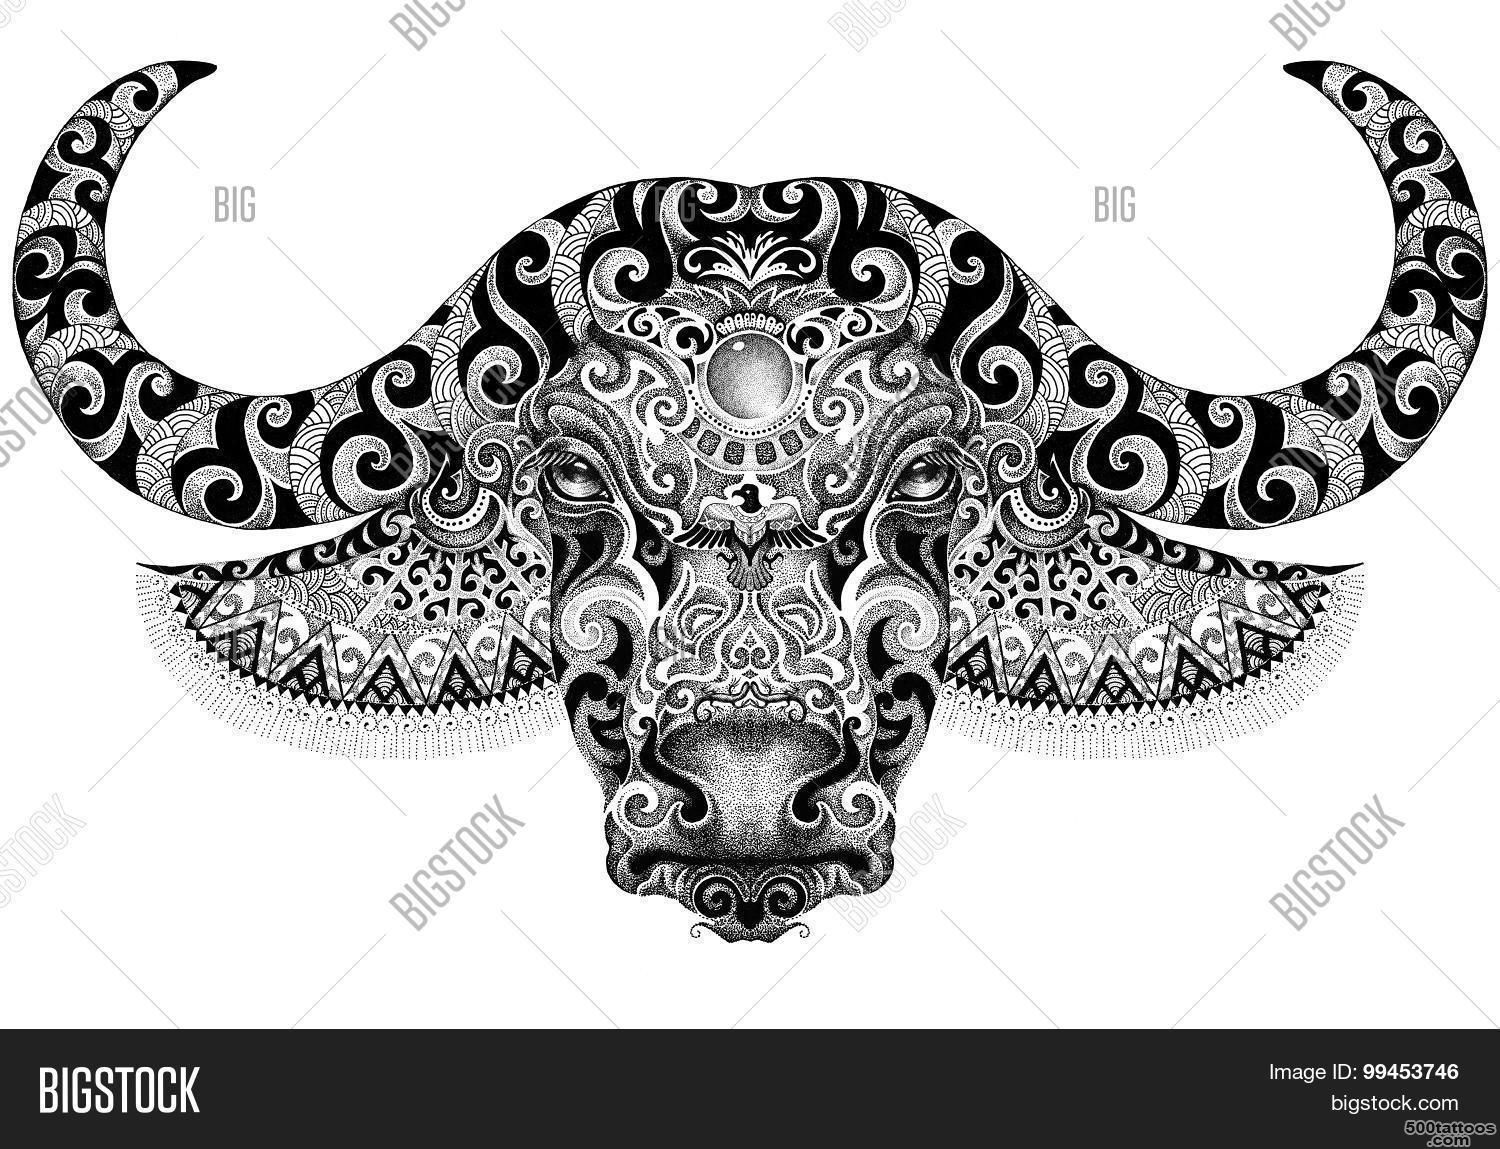 Tattoo, Bull, Buffalo Head With Horns Stock Photo amp Stock Images ..._38